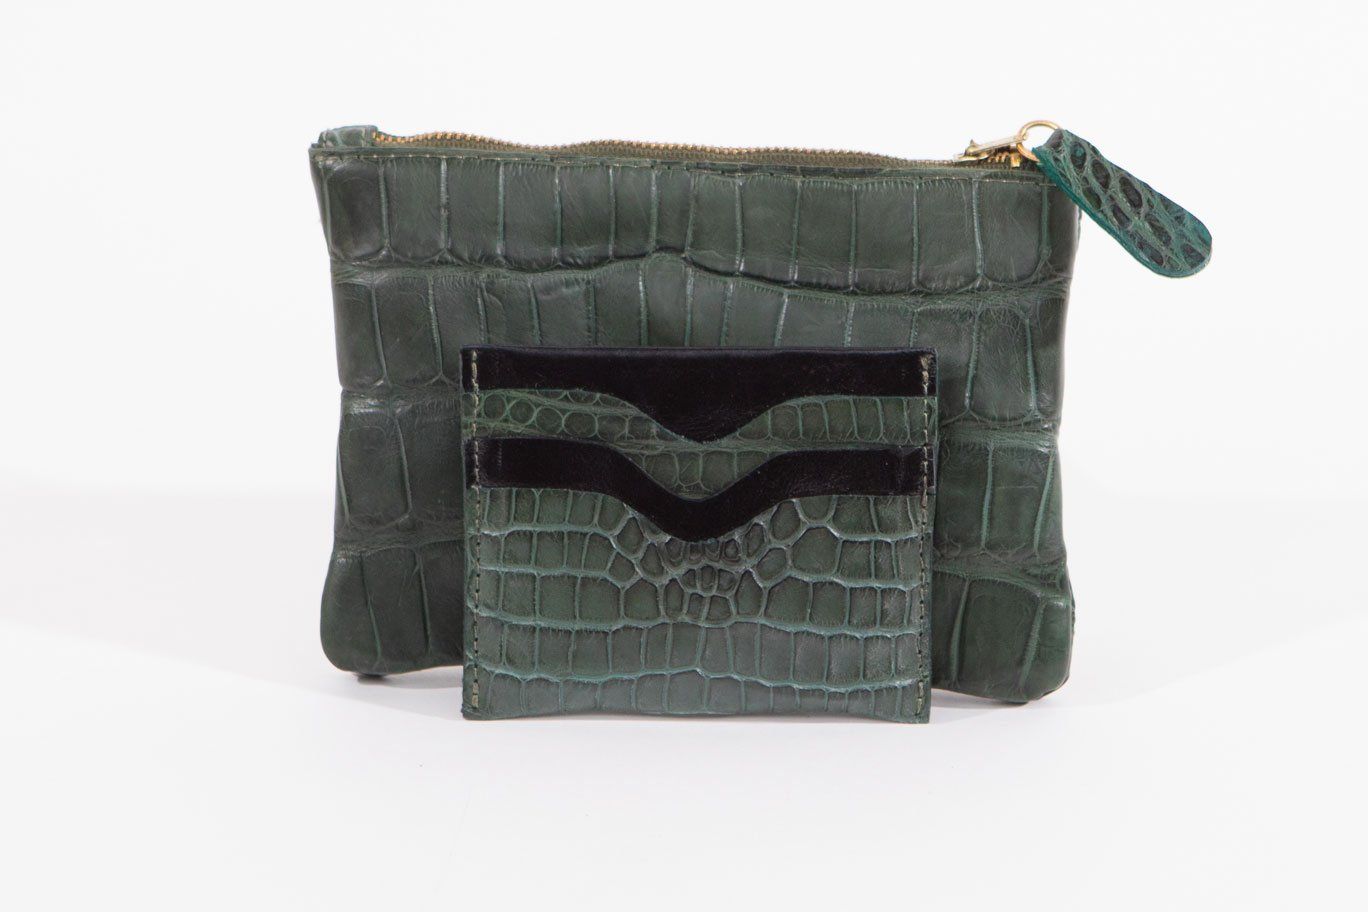 image for luxury handbag houston